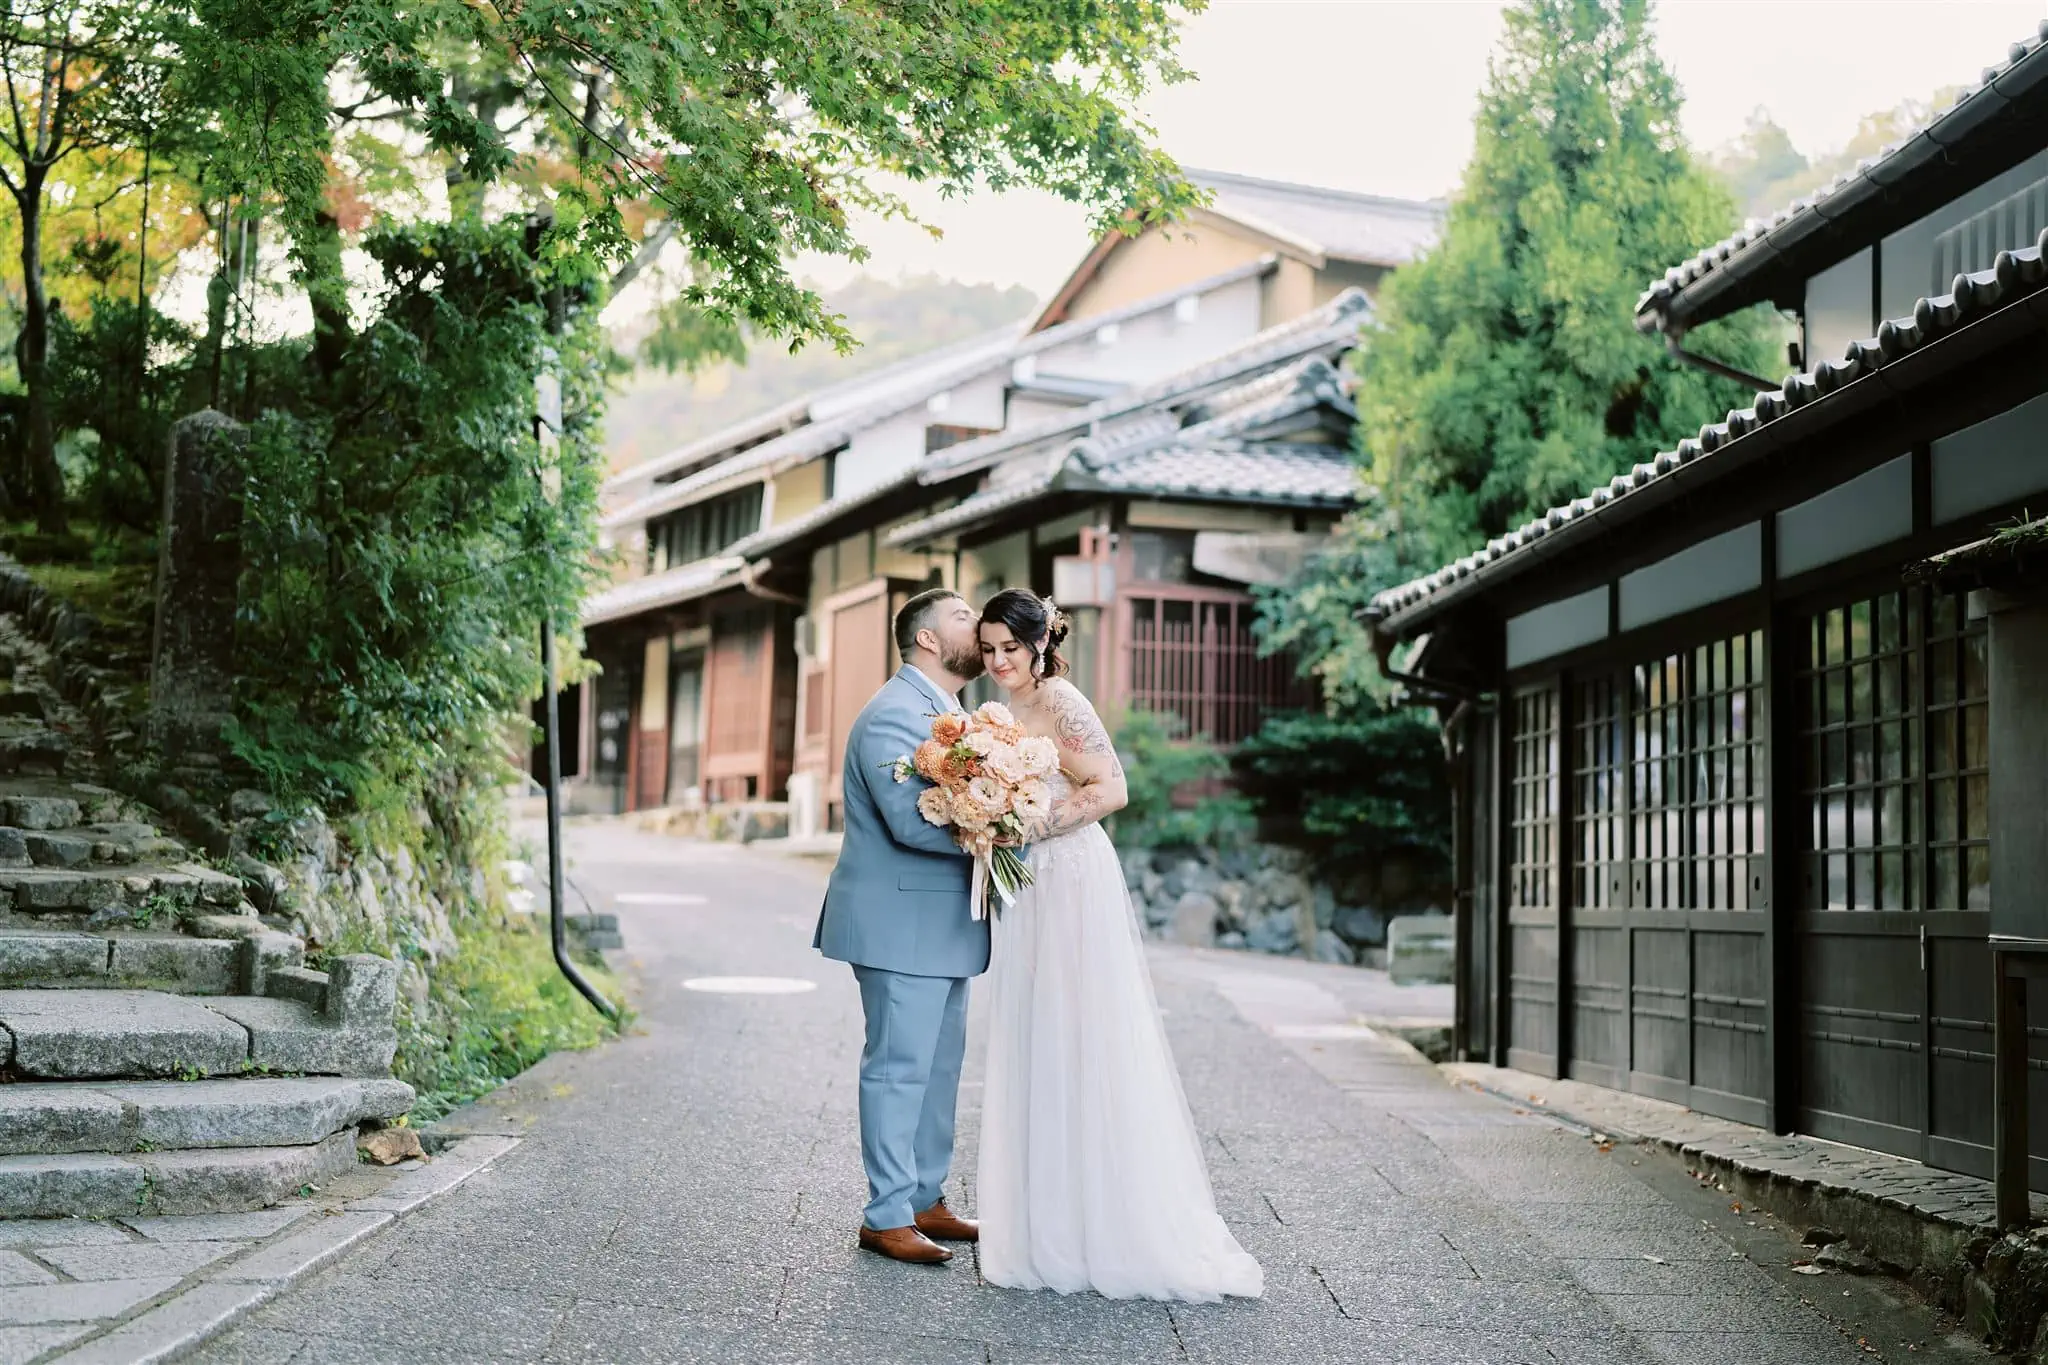 Laura & Claudio | Kyoto, Japan Elopement Wedding